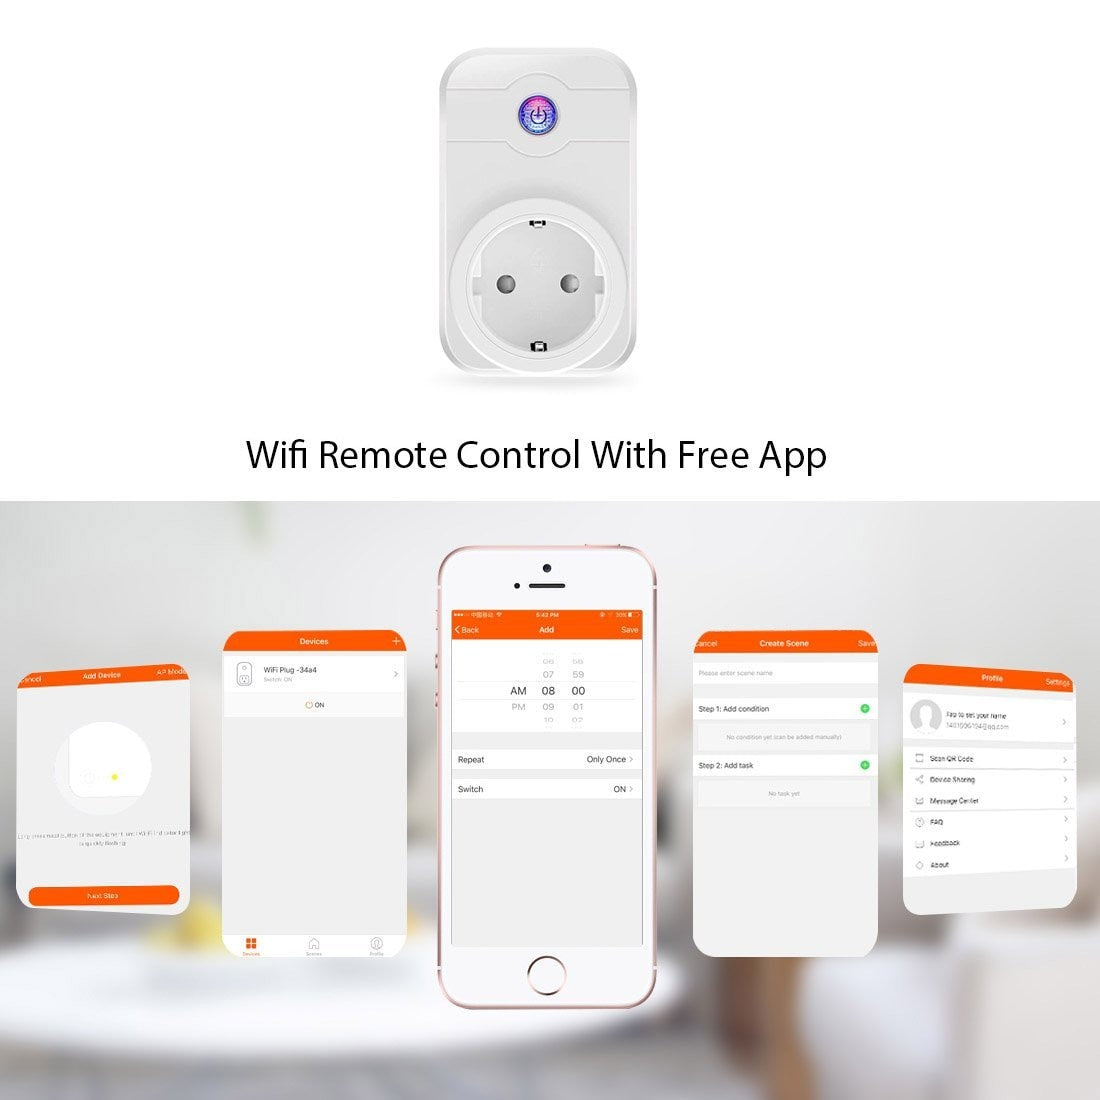 Smart WiFi Plug Power Socket Adapter EU/US/UK Outlet Remote Voice Control Homekit for Amazon Echo Alexa Google Home Assistant